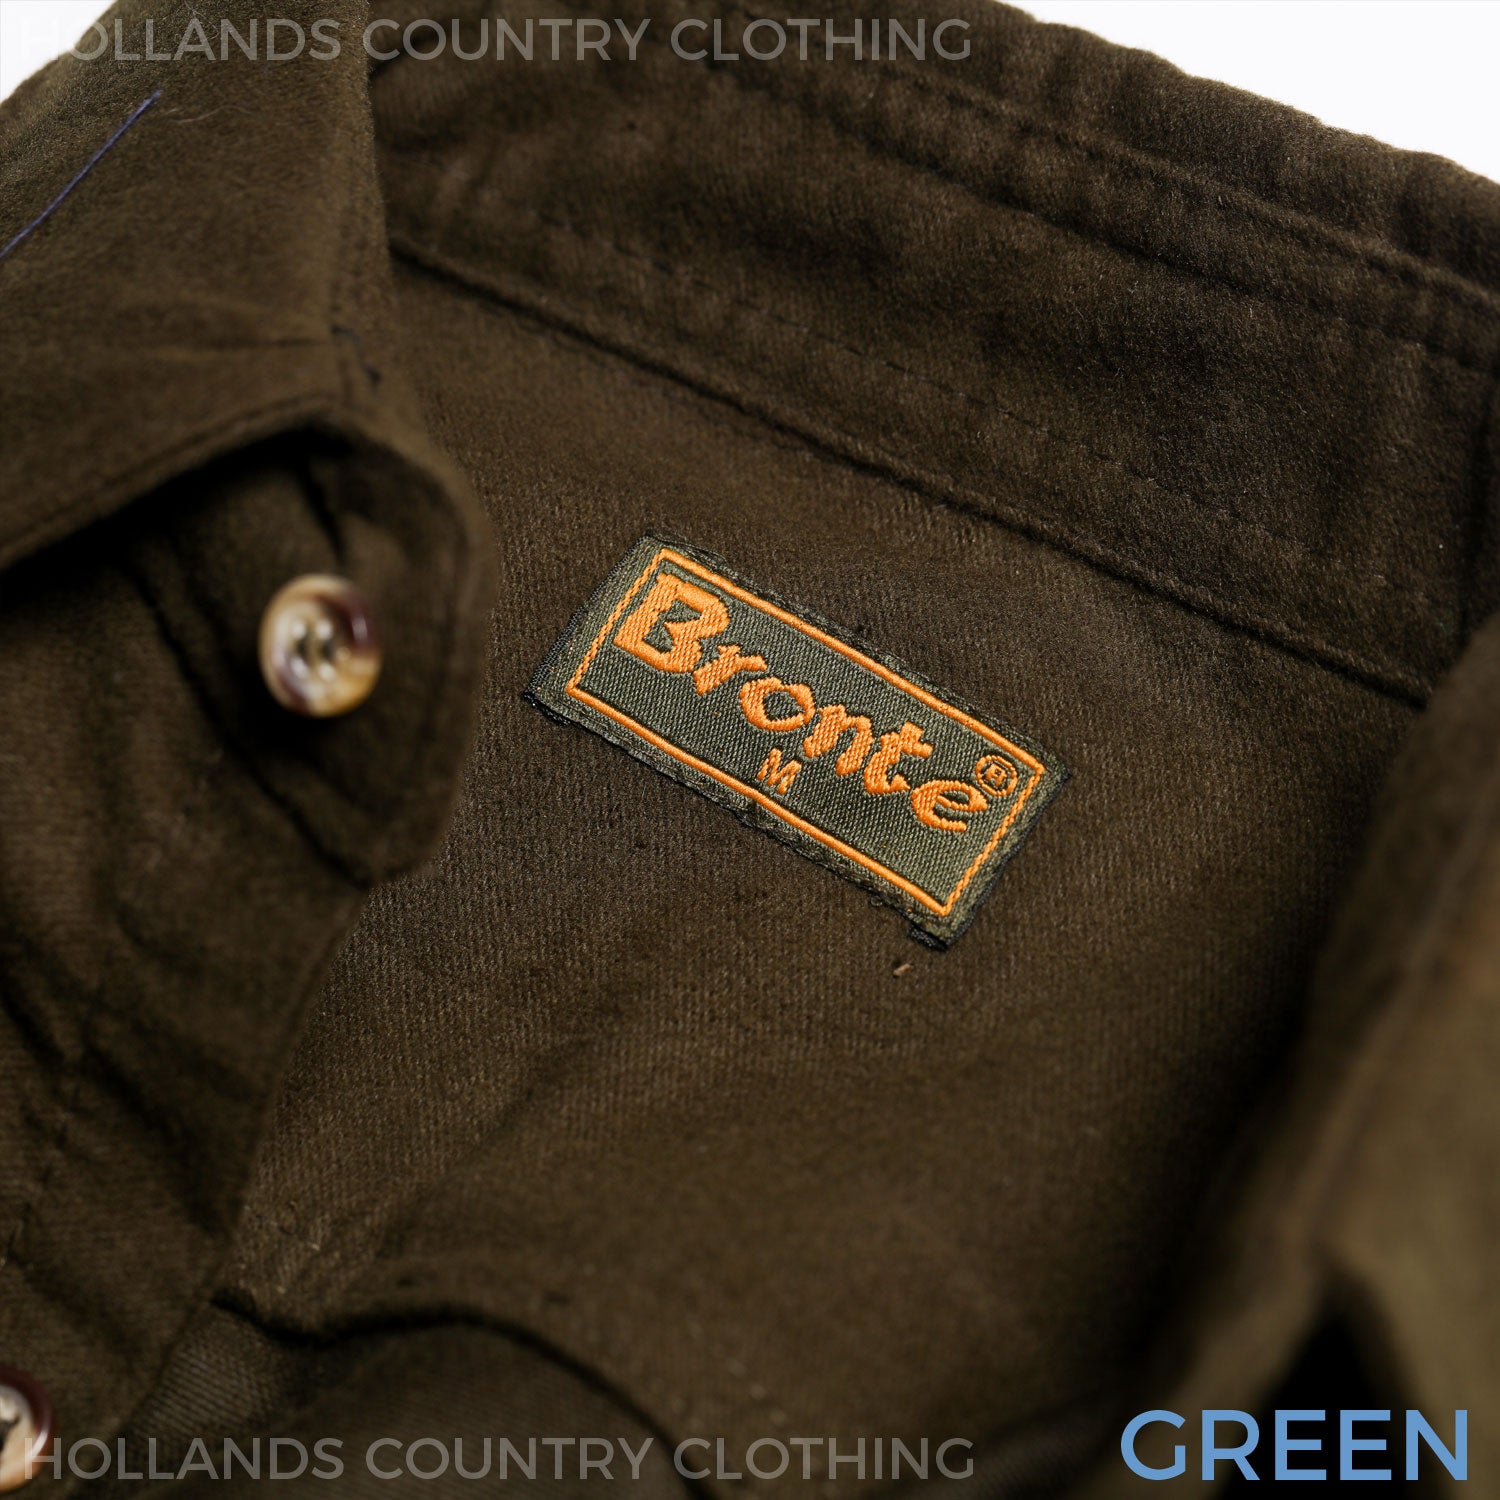 Bronte Moleskin Country Shirt in green collar detail 